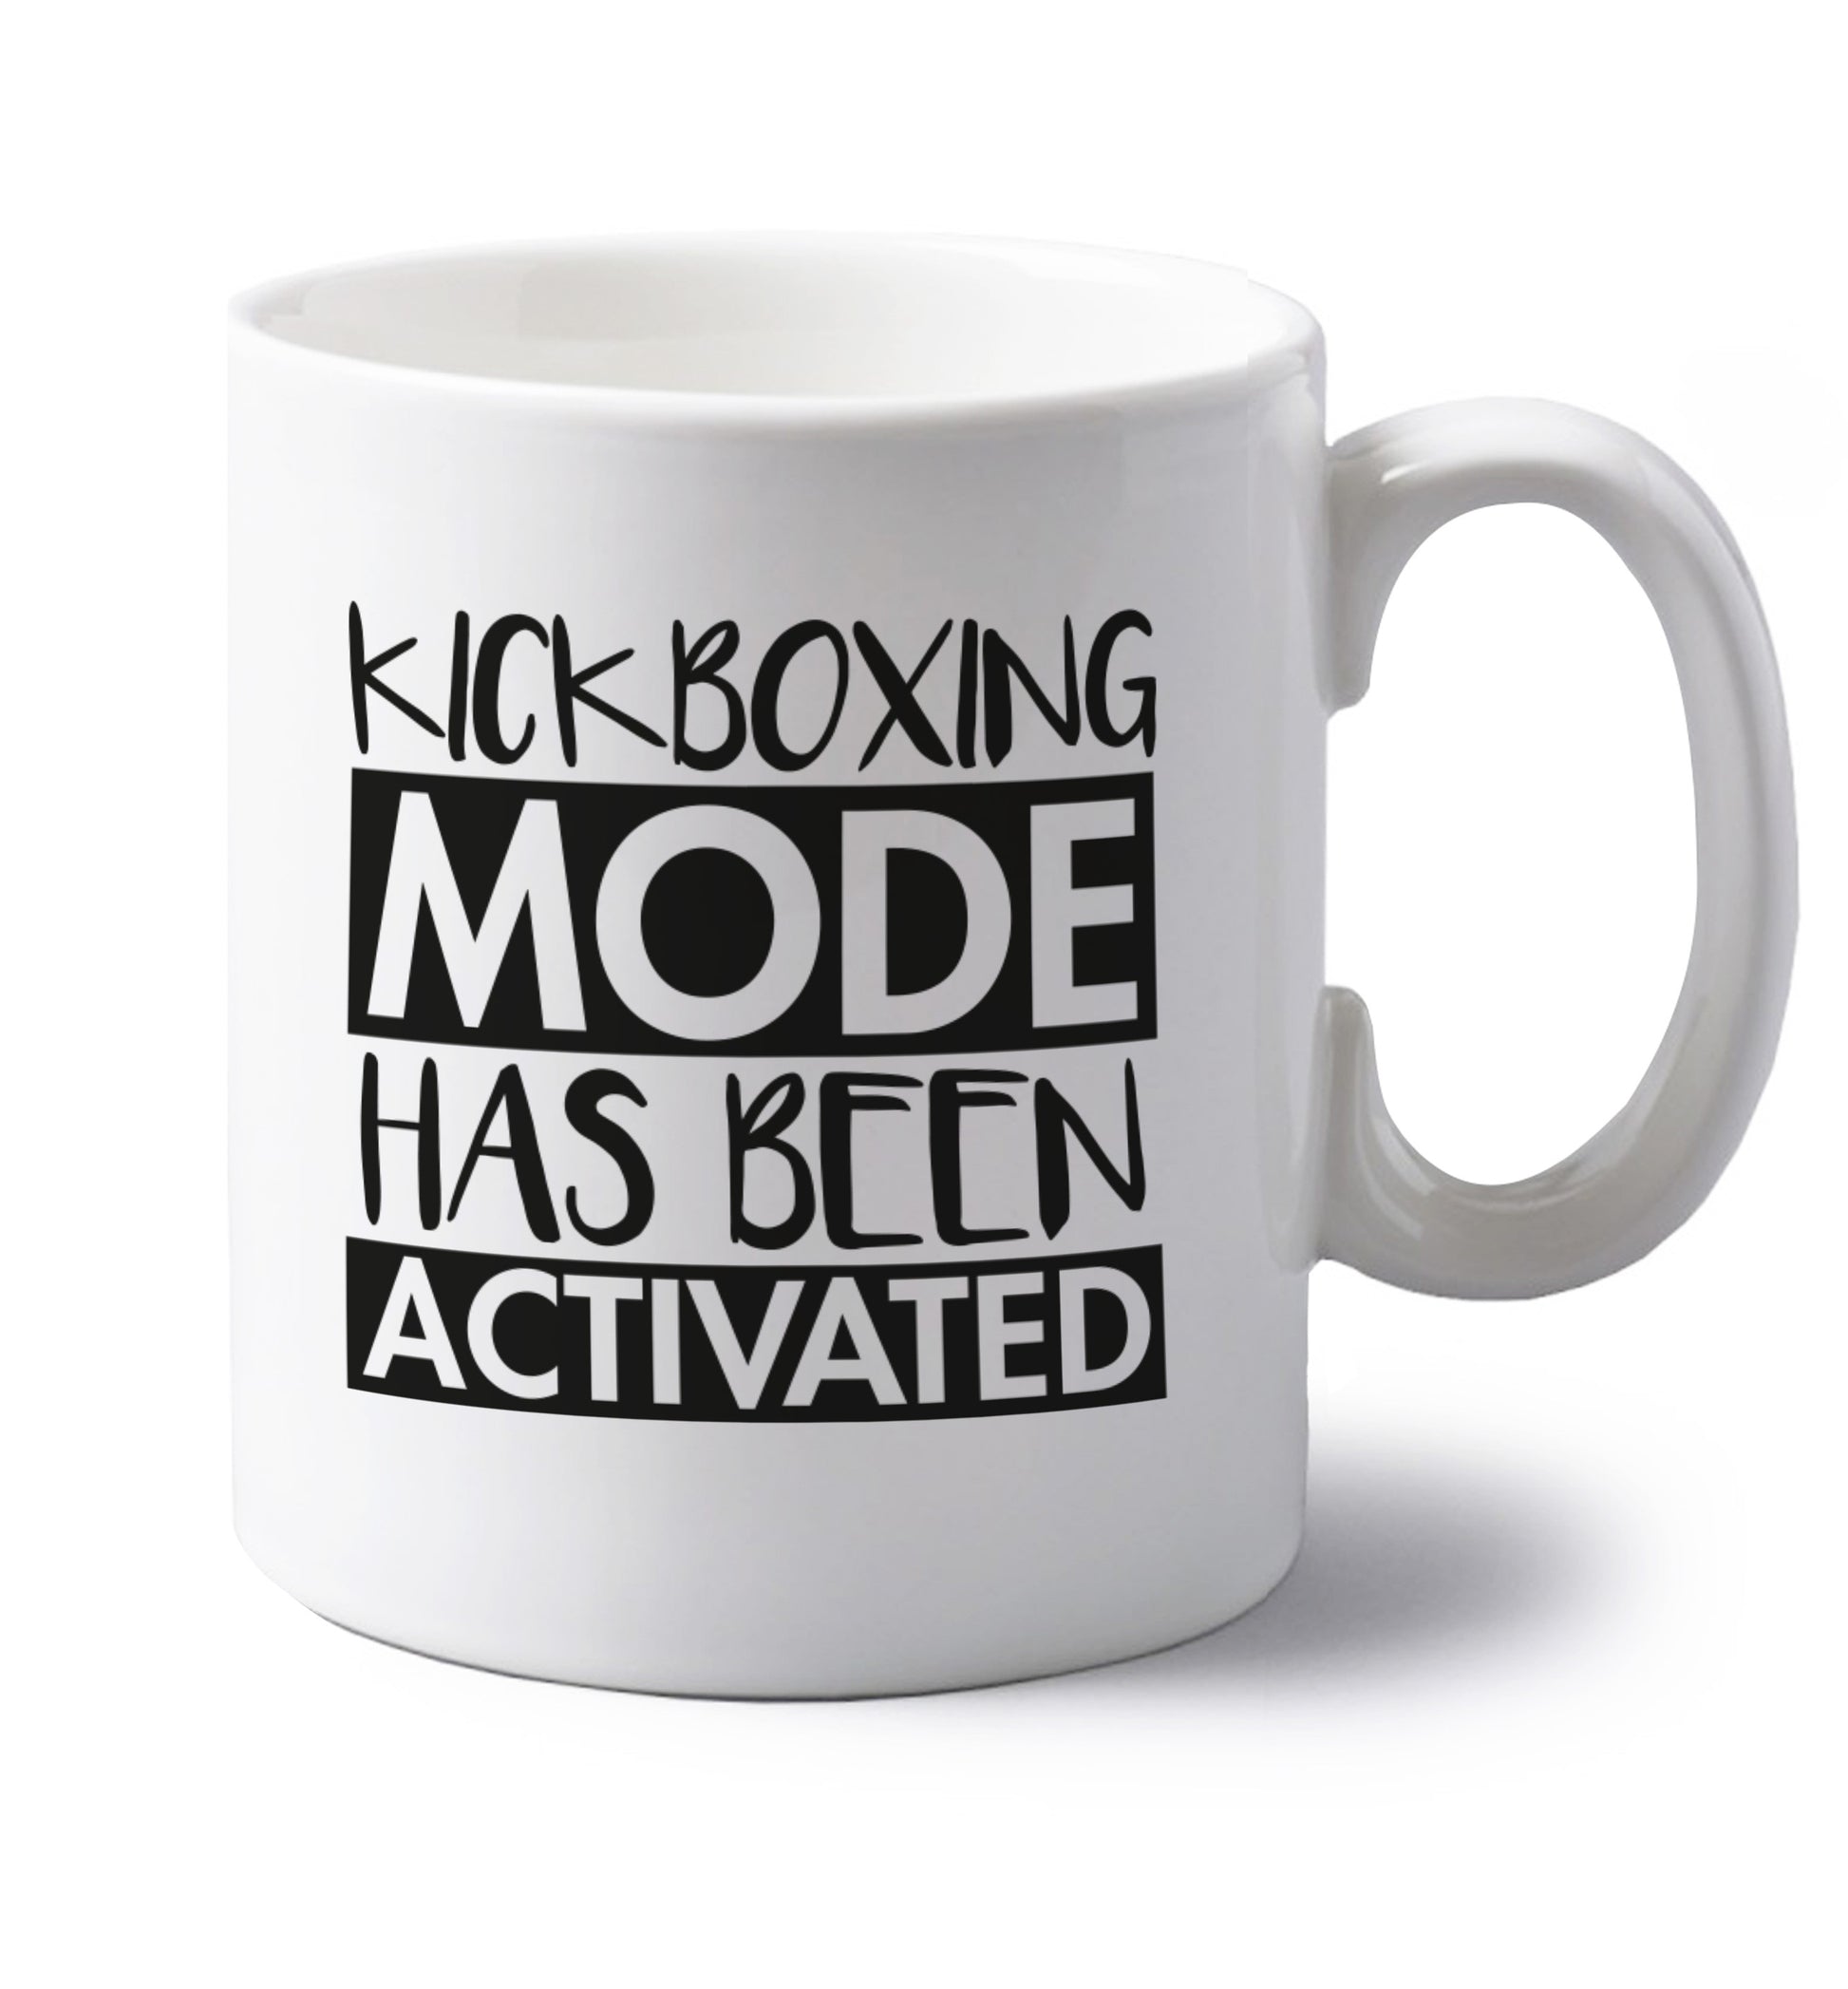 Kickboxing mode activated left handed white ceramic mug 